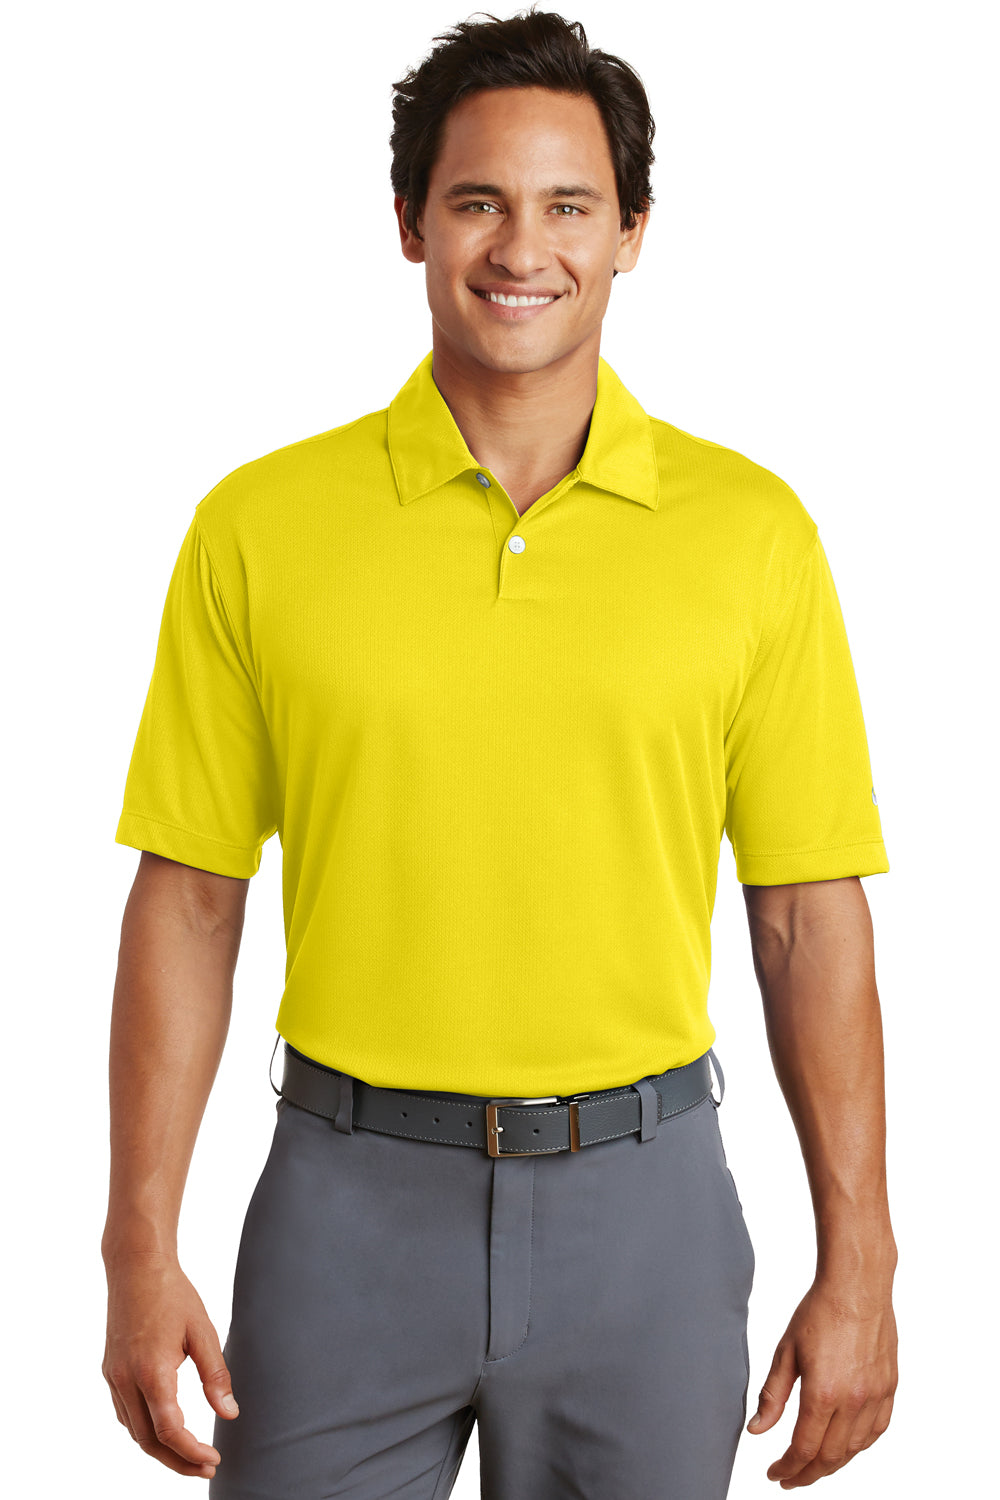 Nike 373749 Mens Dri-Fit Moisture Wicking Short Sleeve Polo Shirt Yellow Front